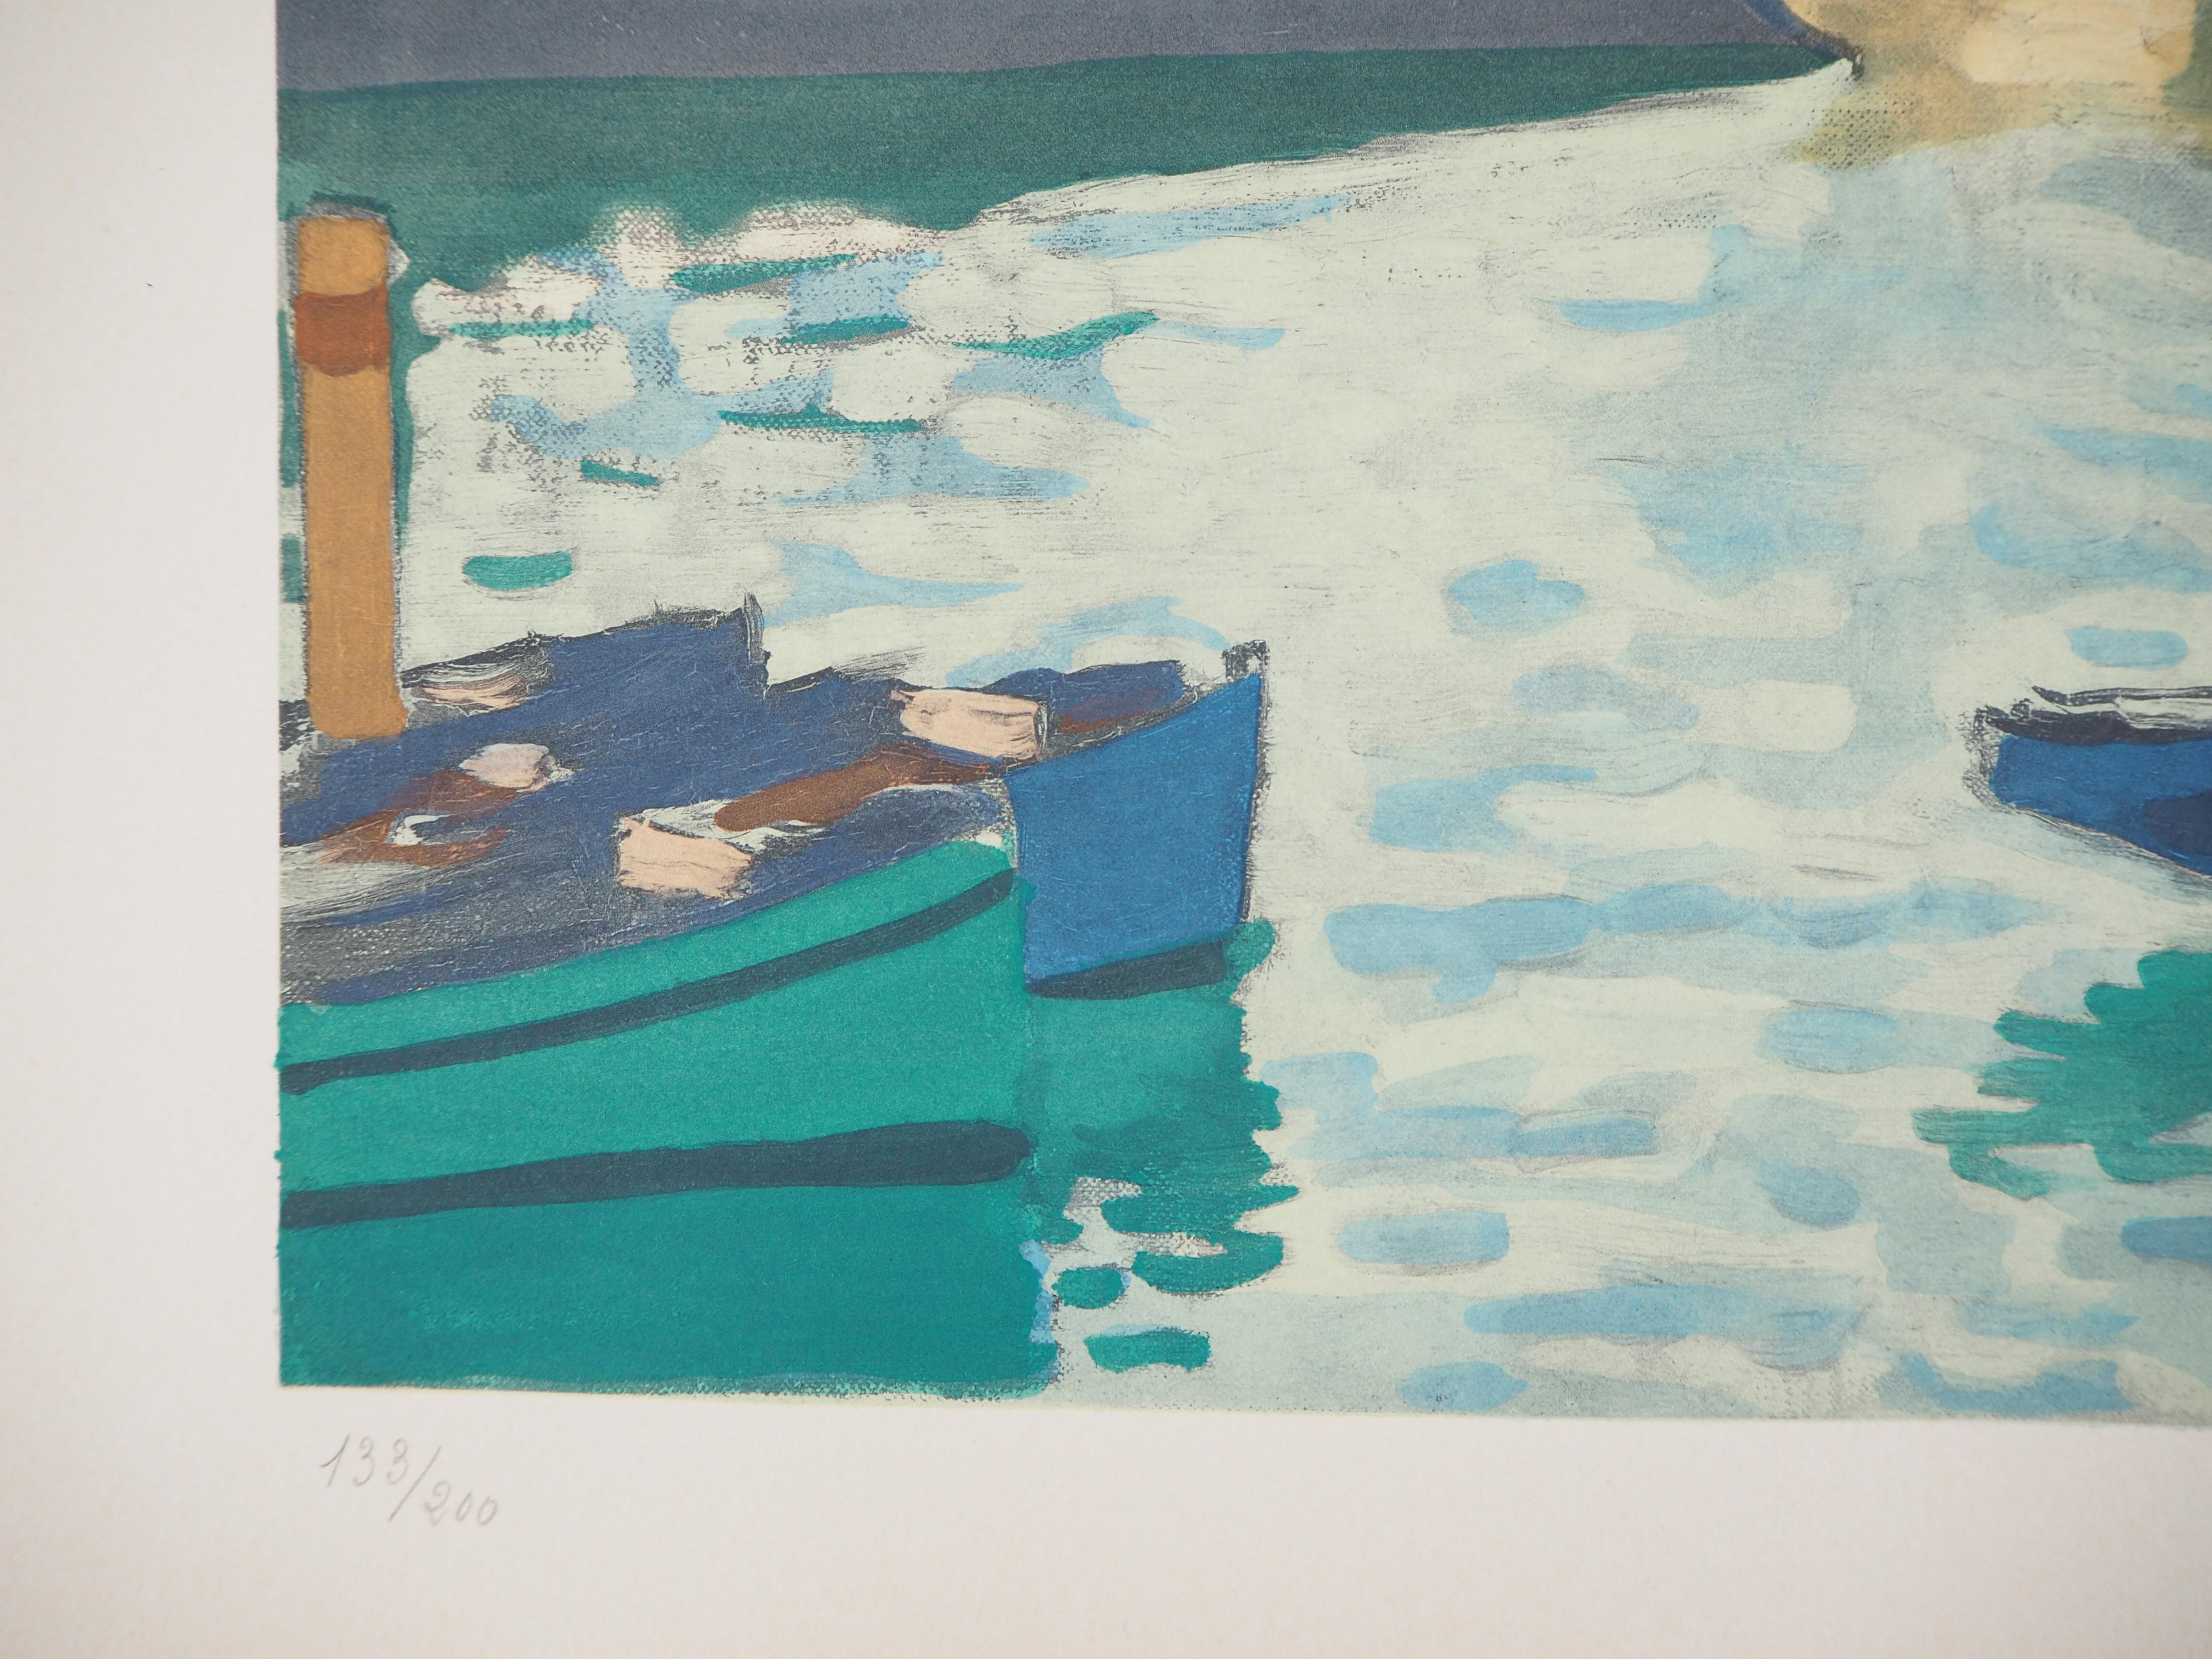 Saint Jean de Luz (Harbor in the South West of France) - Lithograph, Ltd /200 - Post-Impressionist Print by Albert Marquet